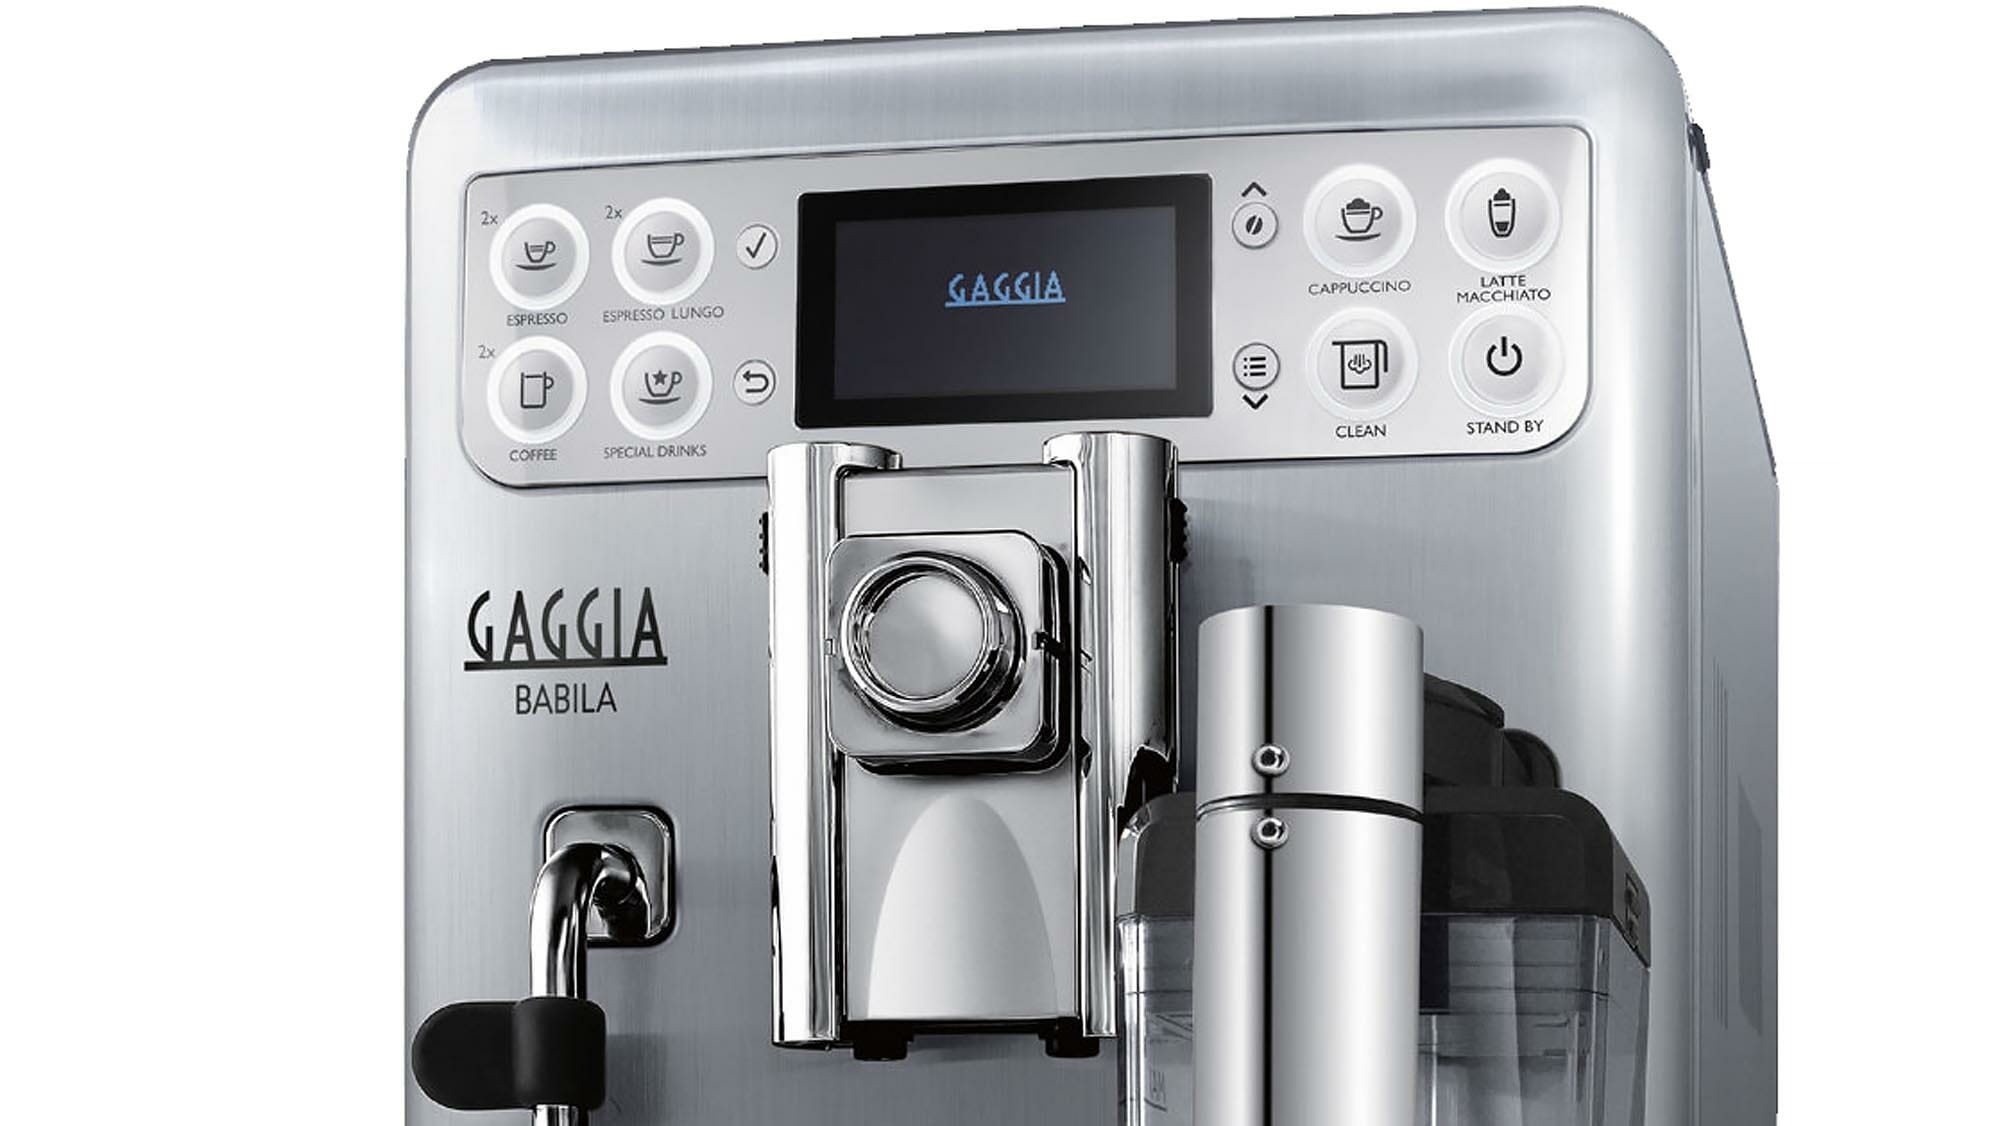 Espressomachine Gaggia Babila RI9700 review